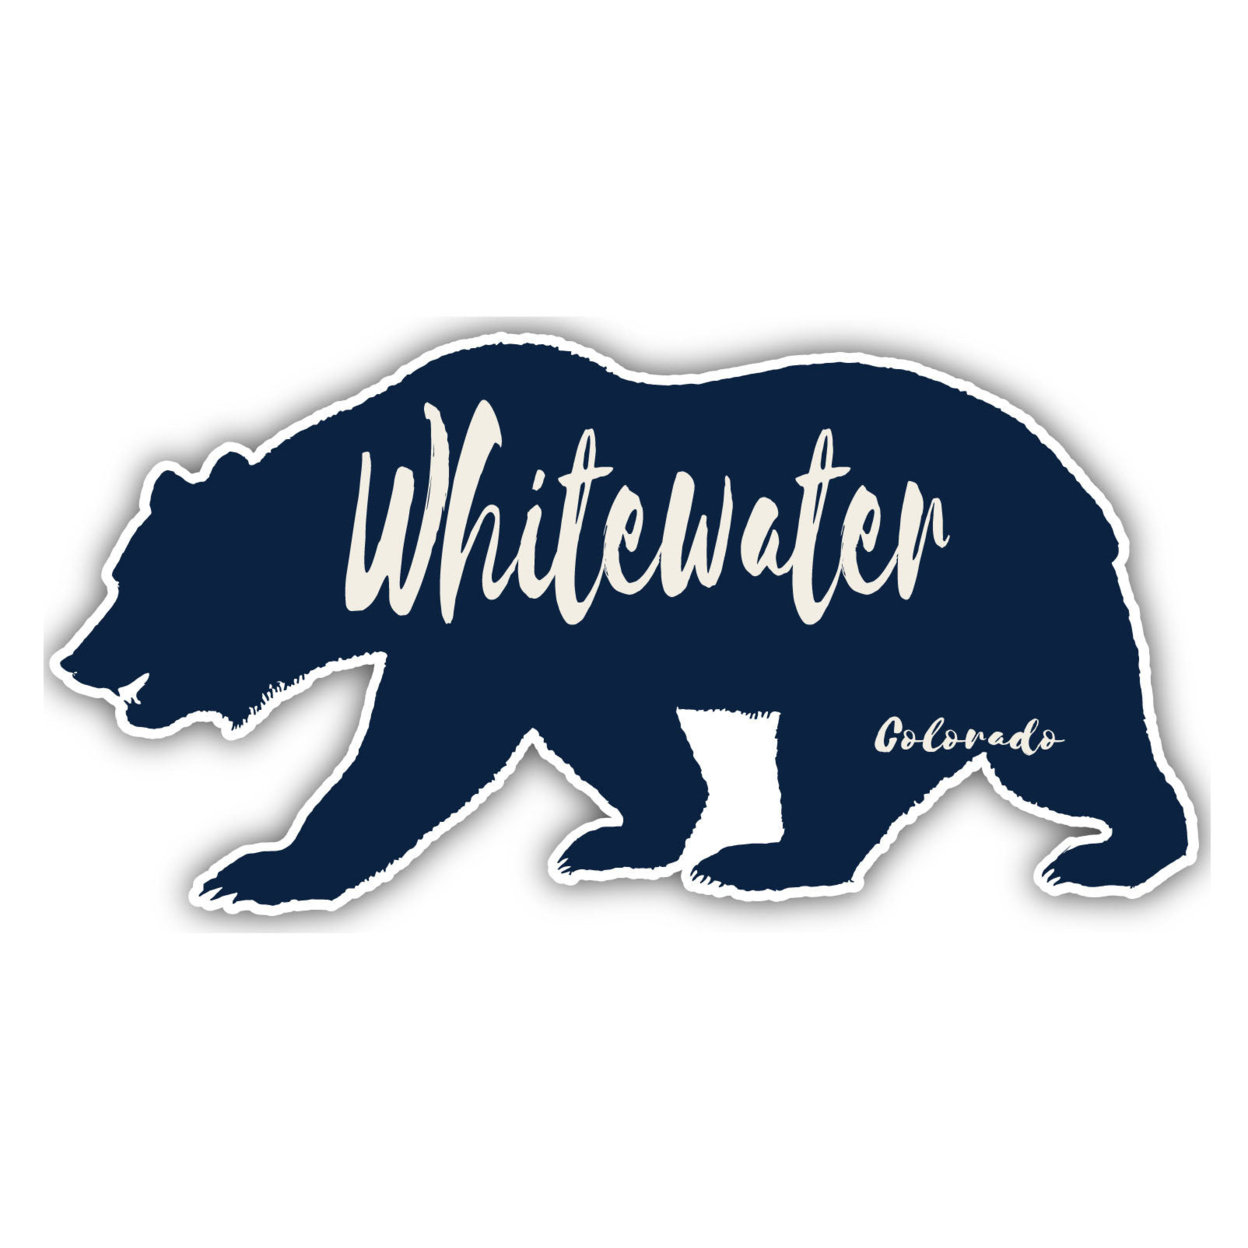 Whitewater Colorado Souvenir Decorative Stickers (Choose Theme And Size) - Single Unit, 4-Inch, Bear